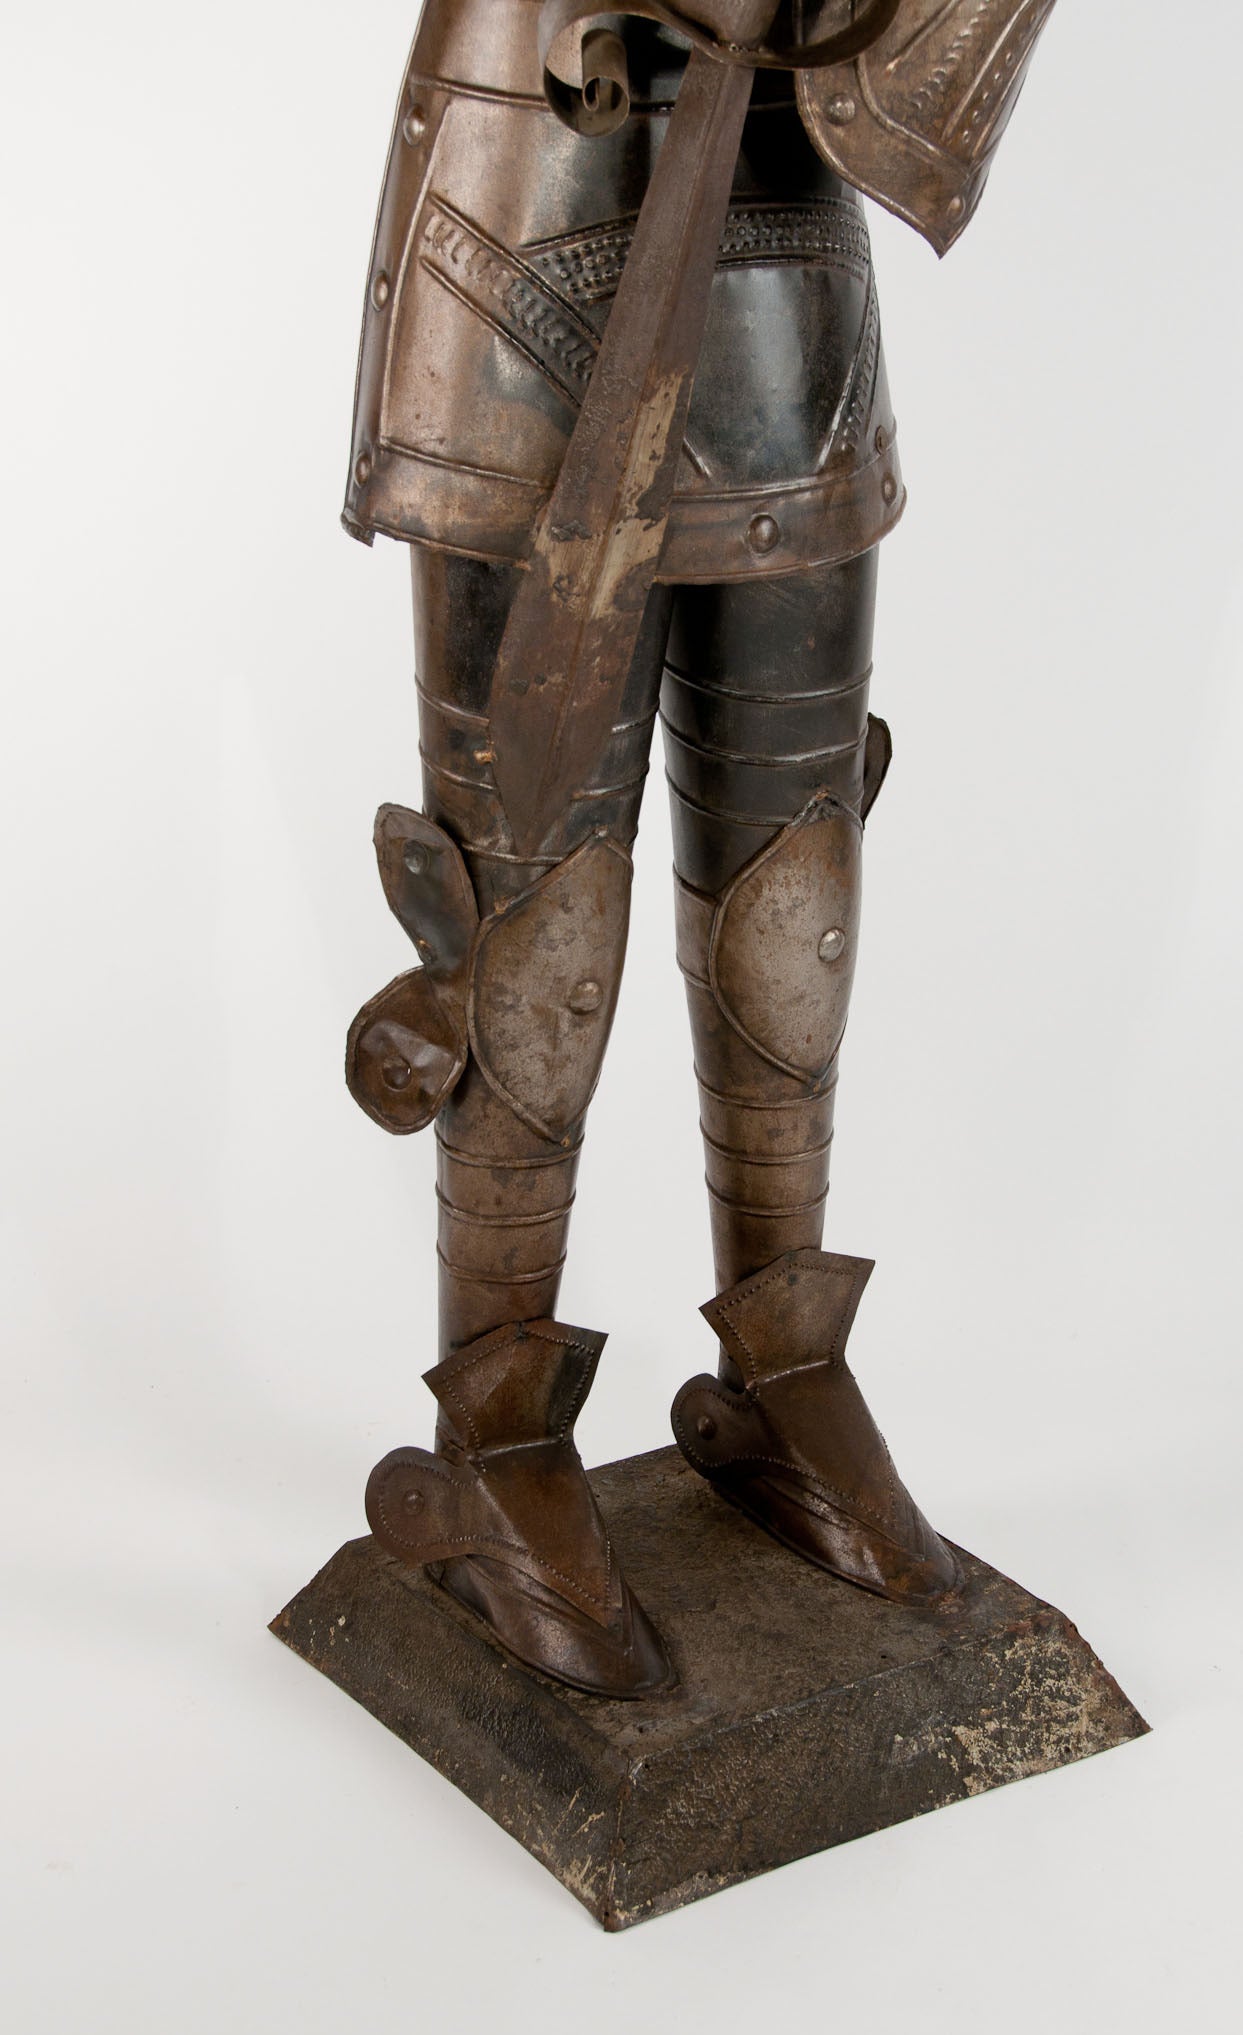 full size knight armor statue